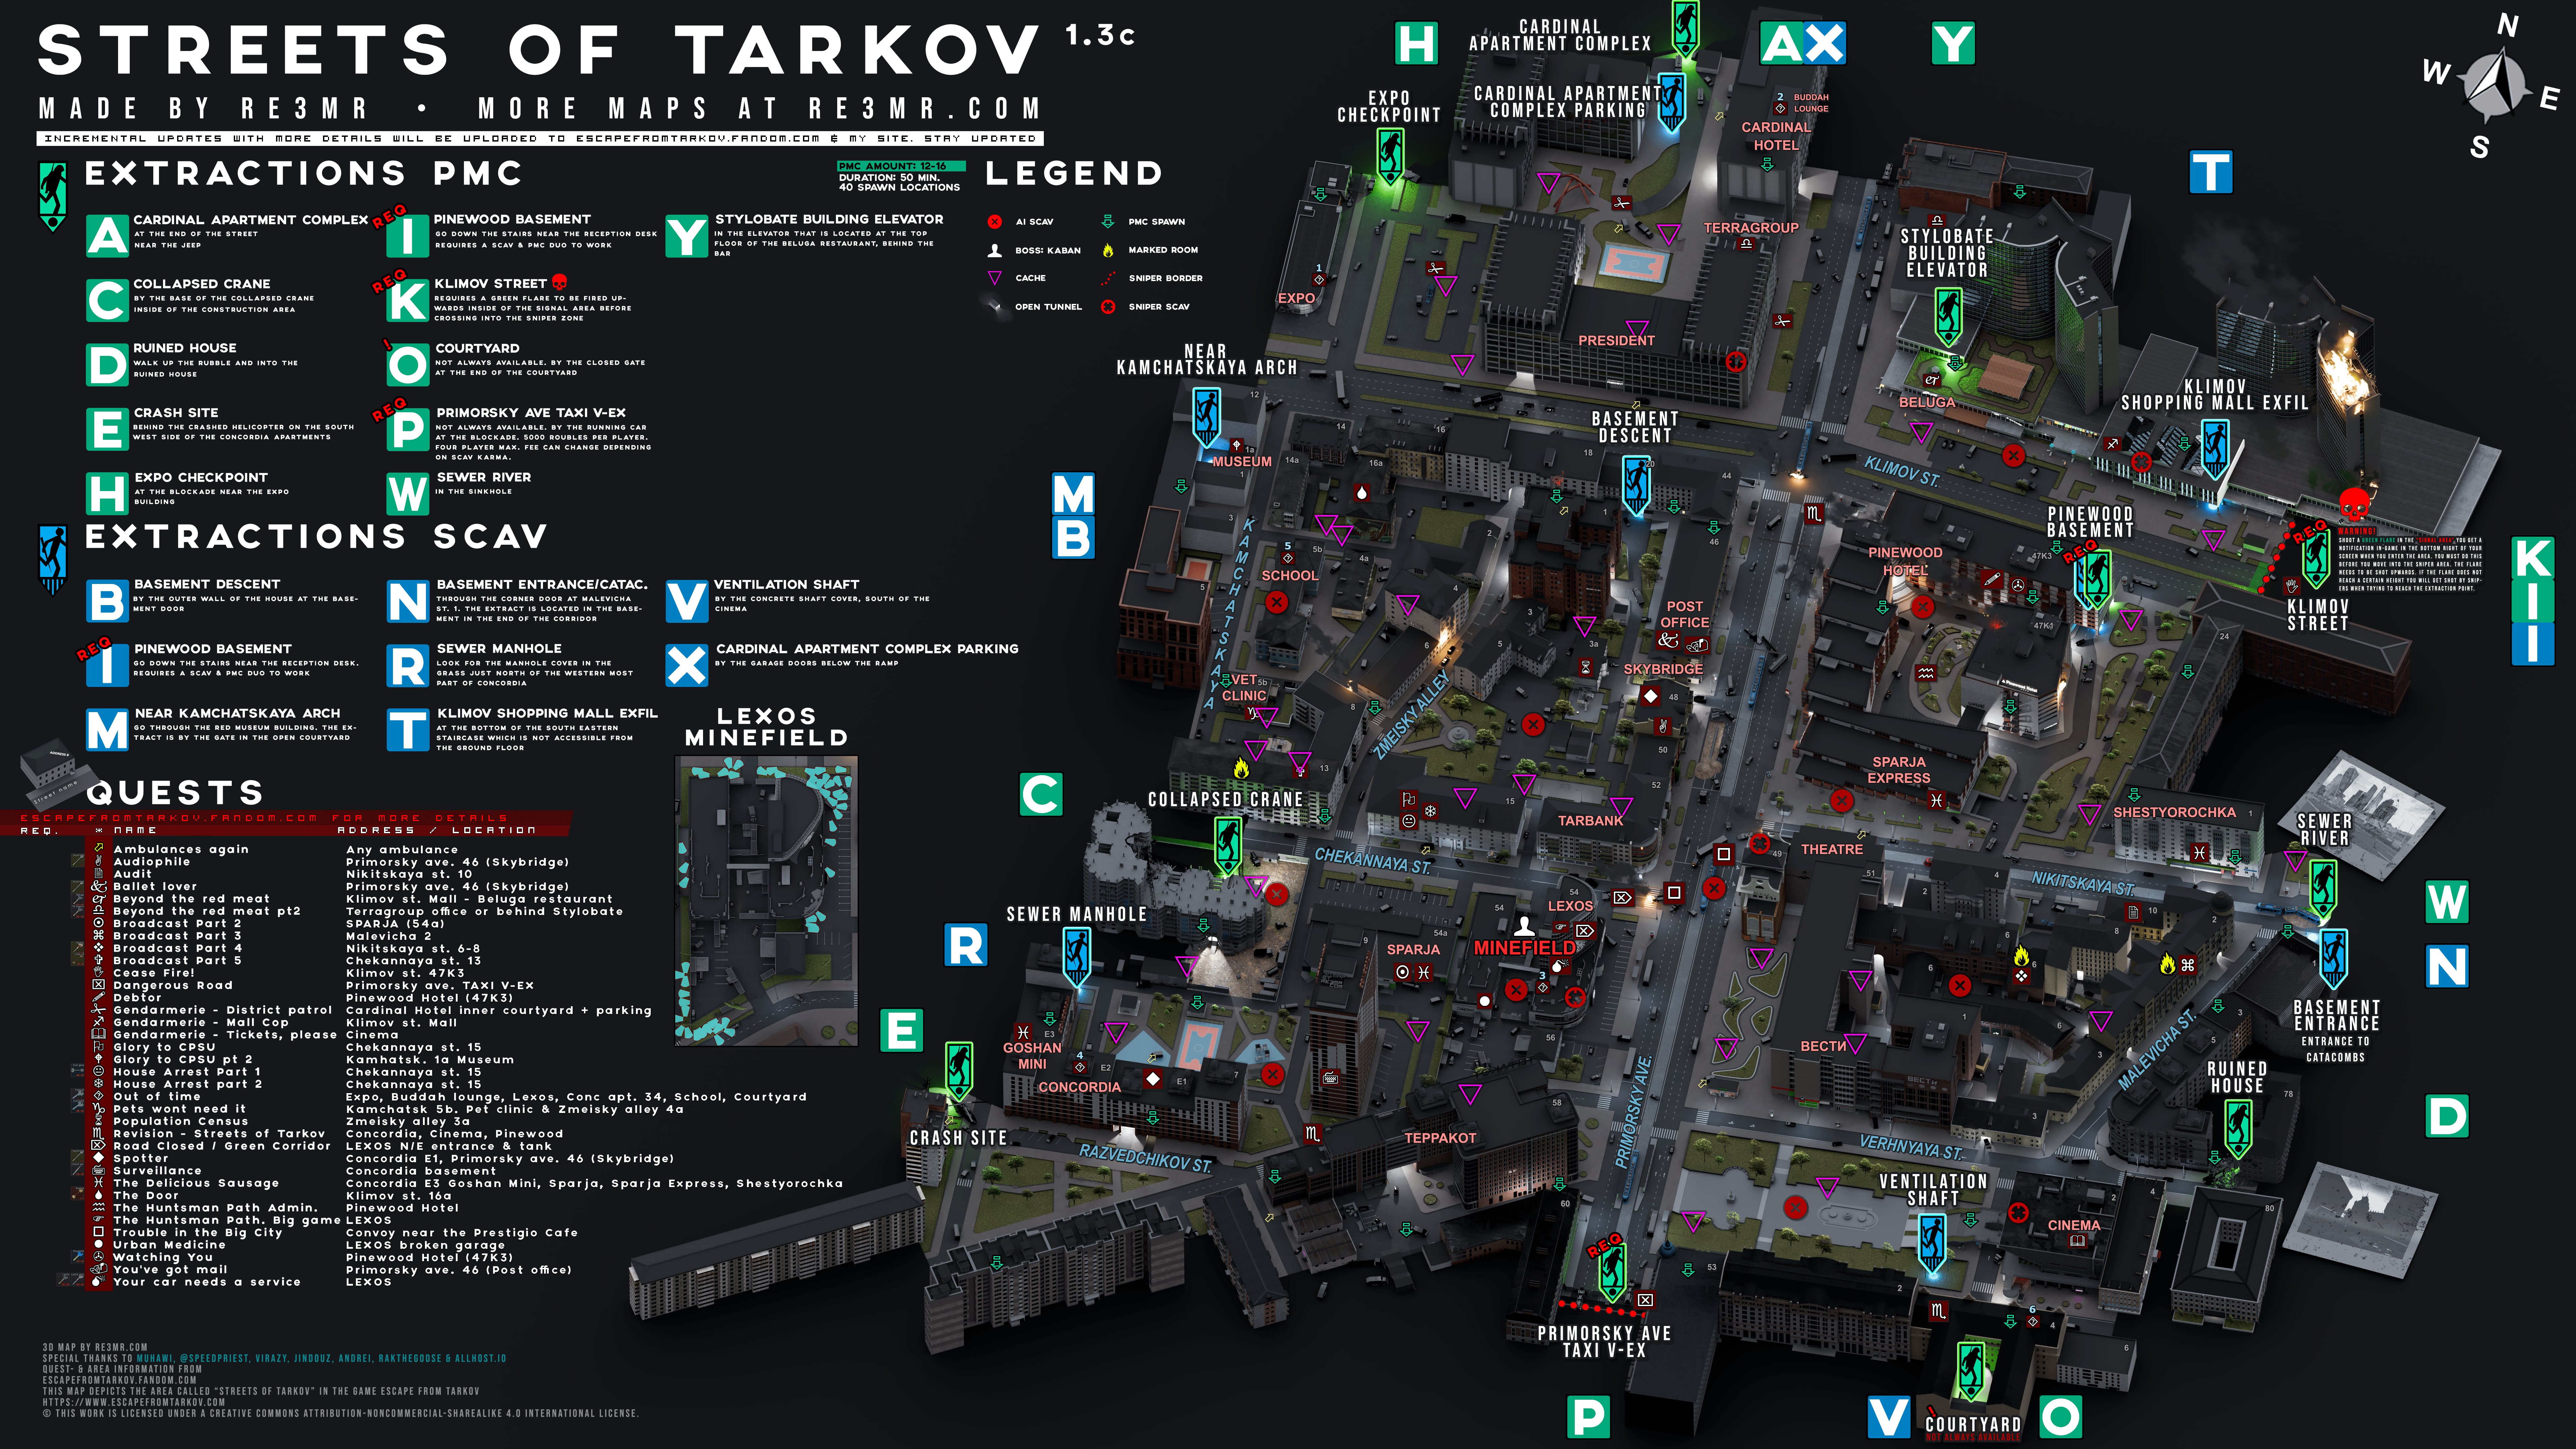 Streets of Tarkov image 2